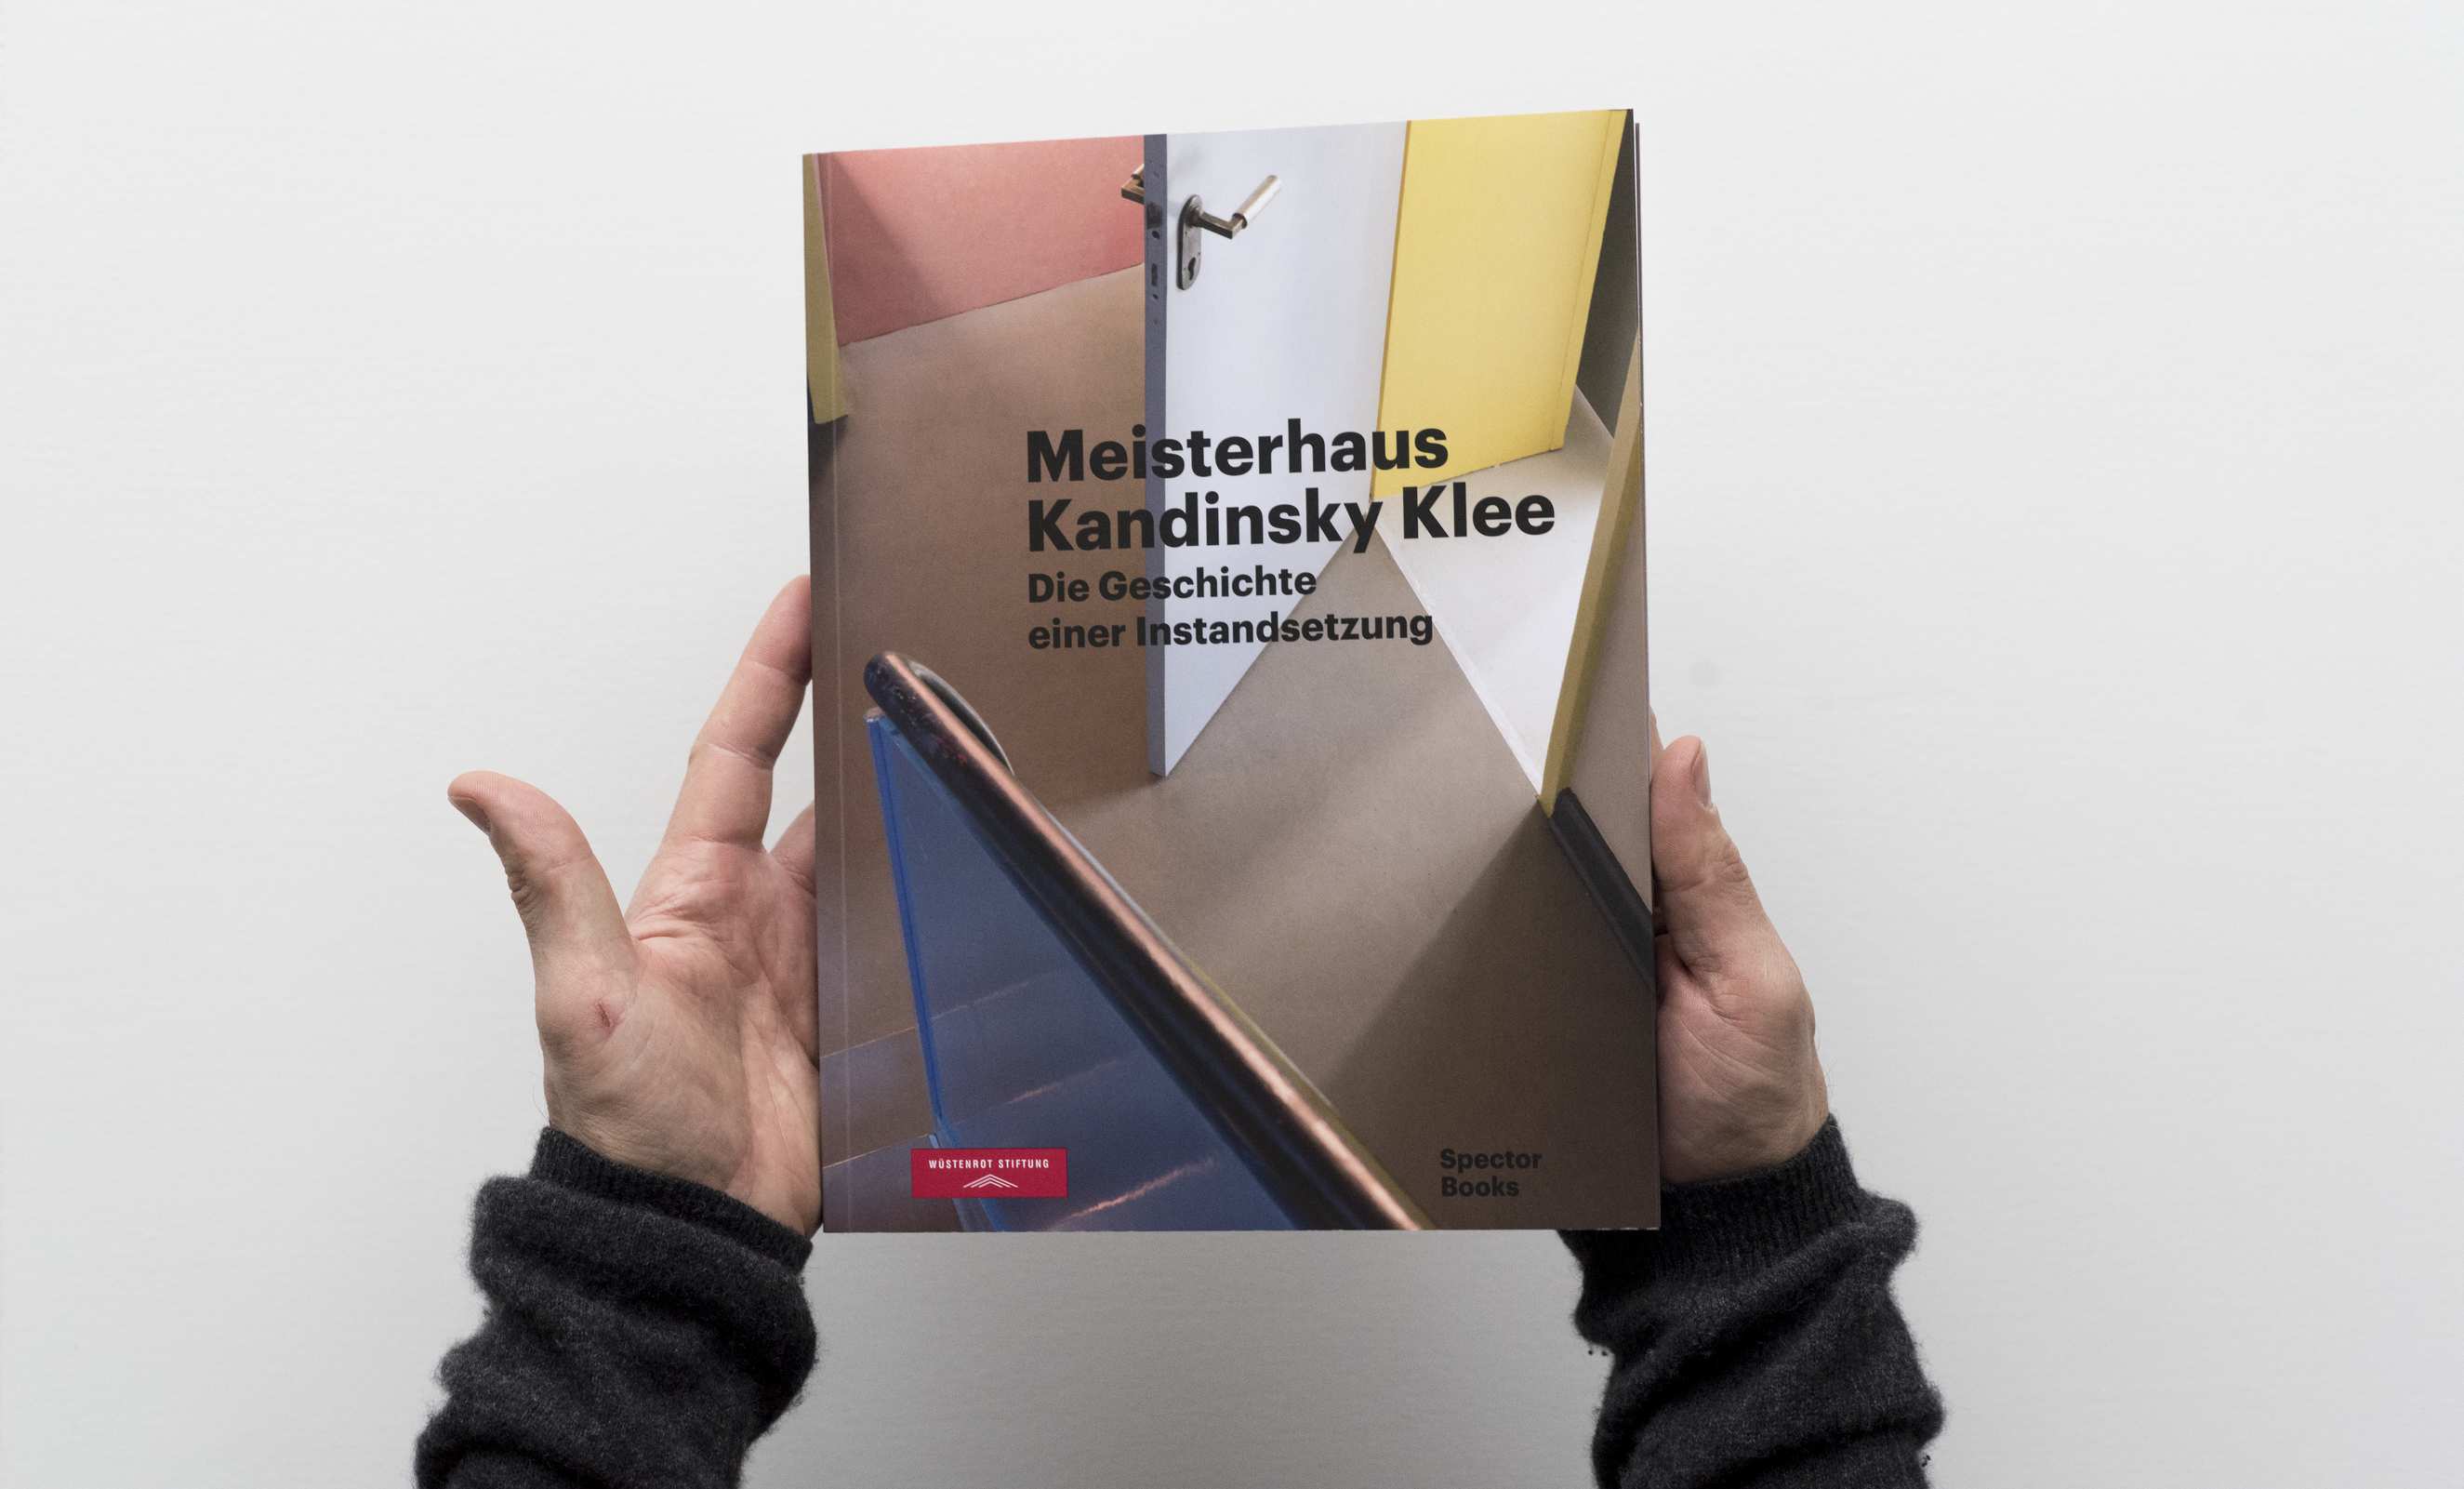 meisterhaus-kandinsky-klee-book-1-2650x1600px